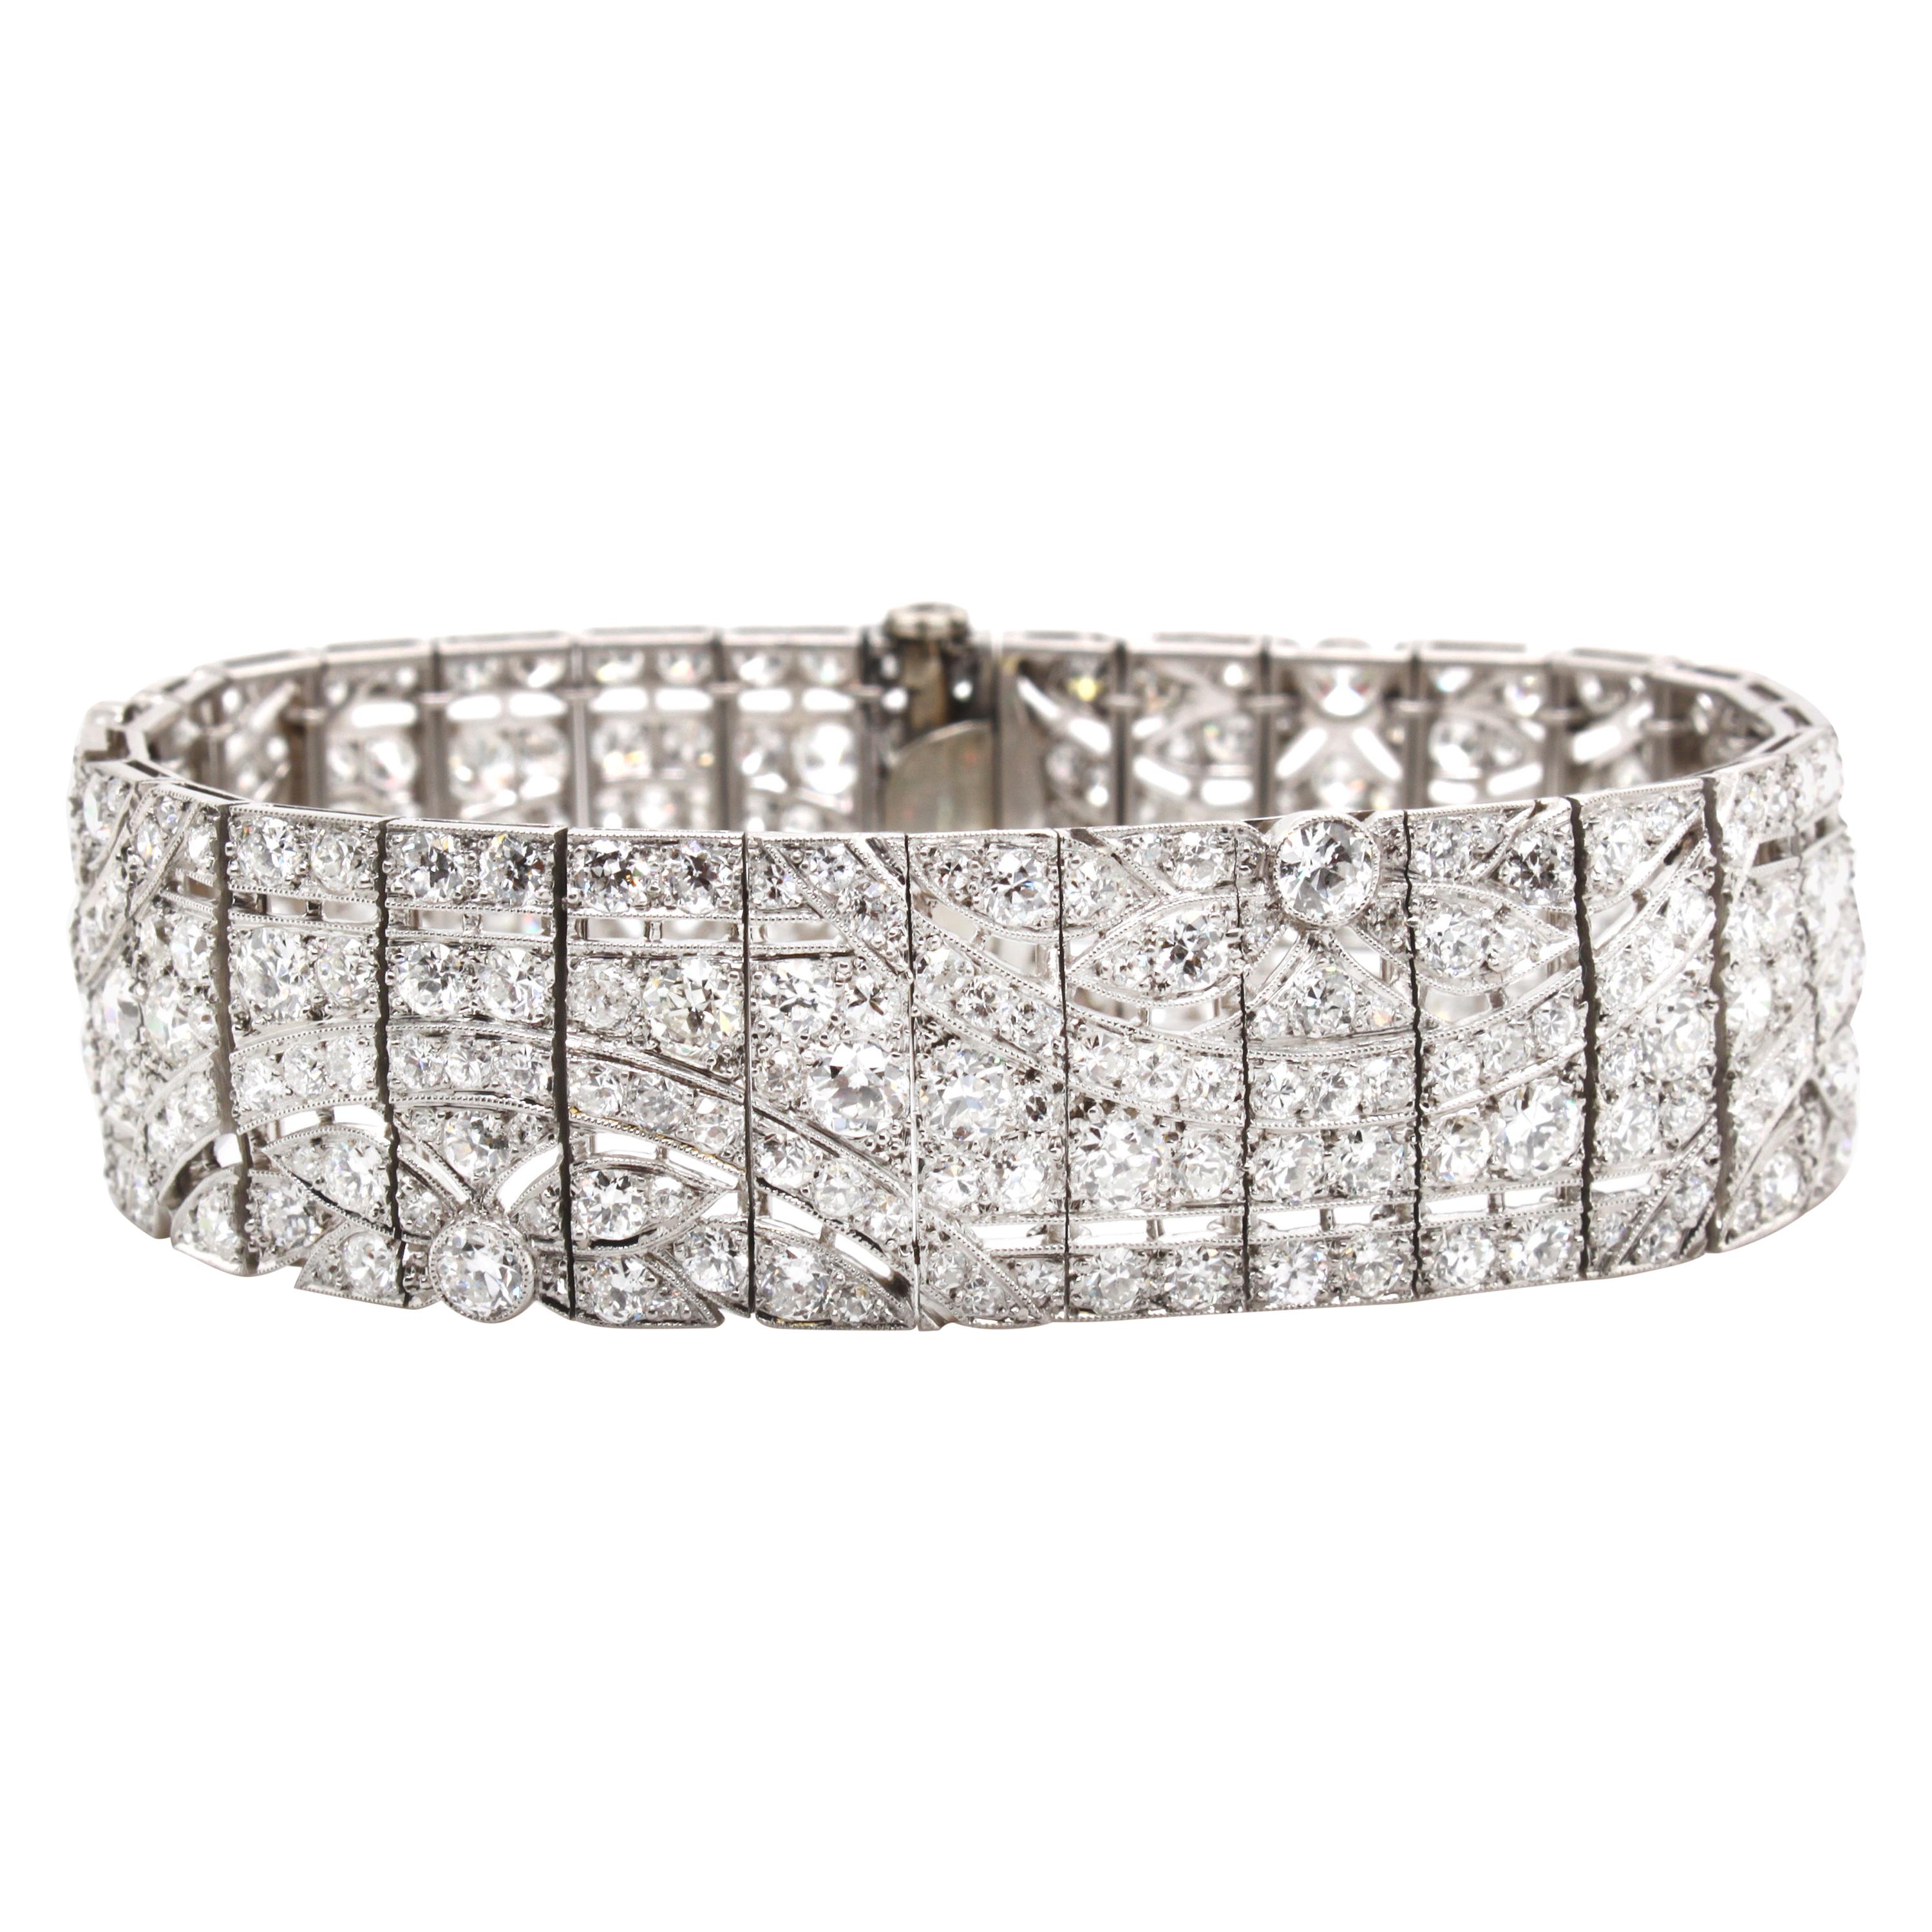 French Art Deco Diamond 'ca. 20 carats' Panel Bracelet, ca. 1920s